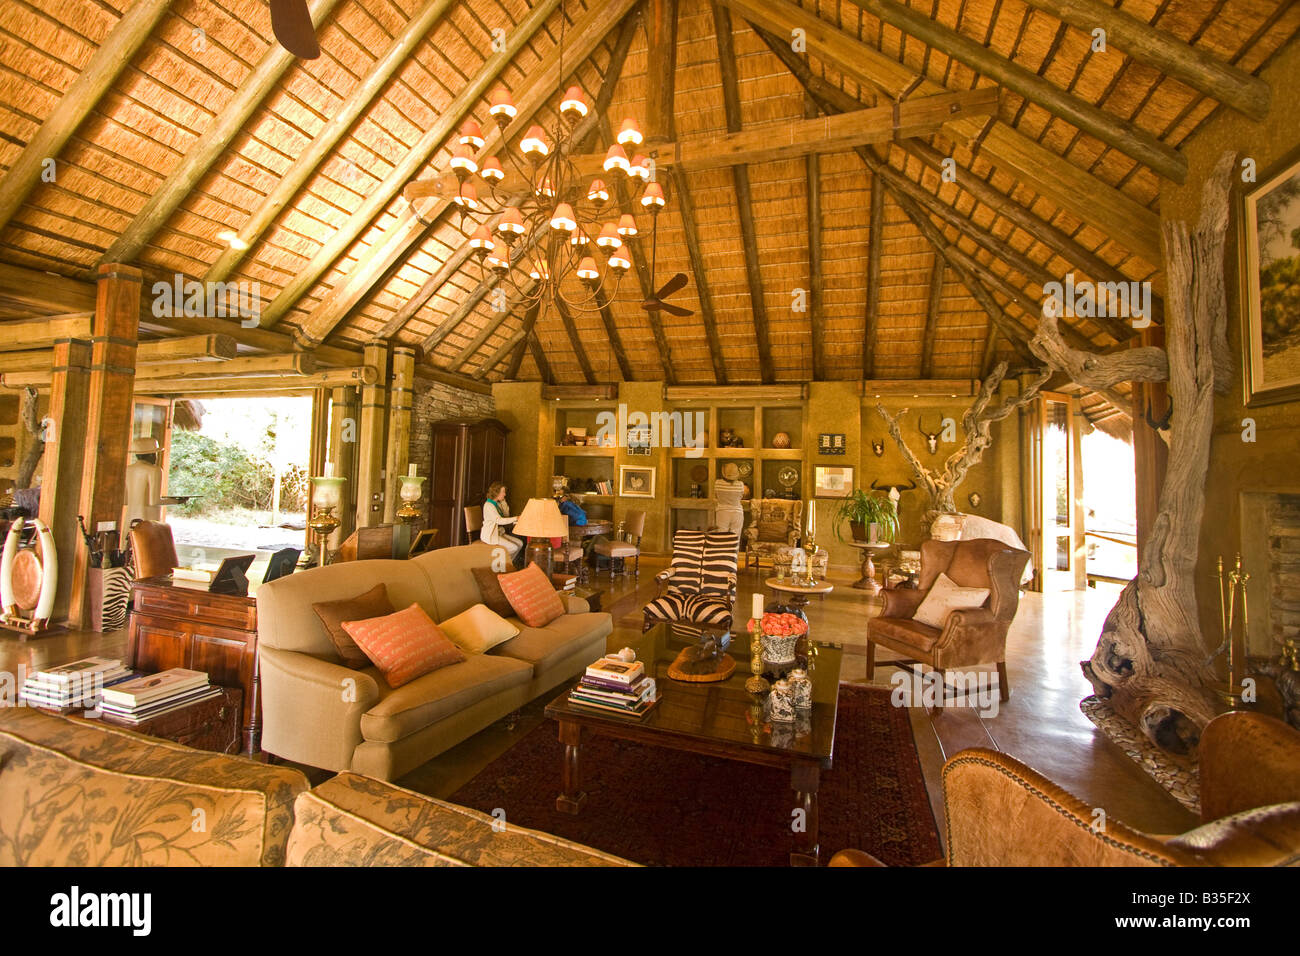 Visitor checks email in lounge area of Camp Jabulani upscale Safari camp outside Hoedspruit South Africa Stock Photo